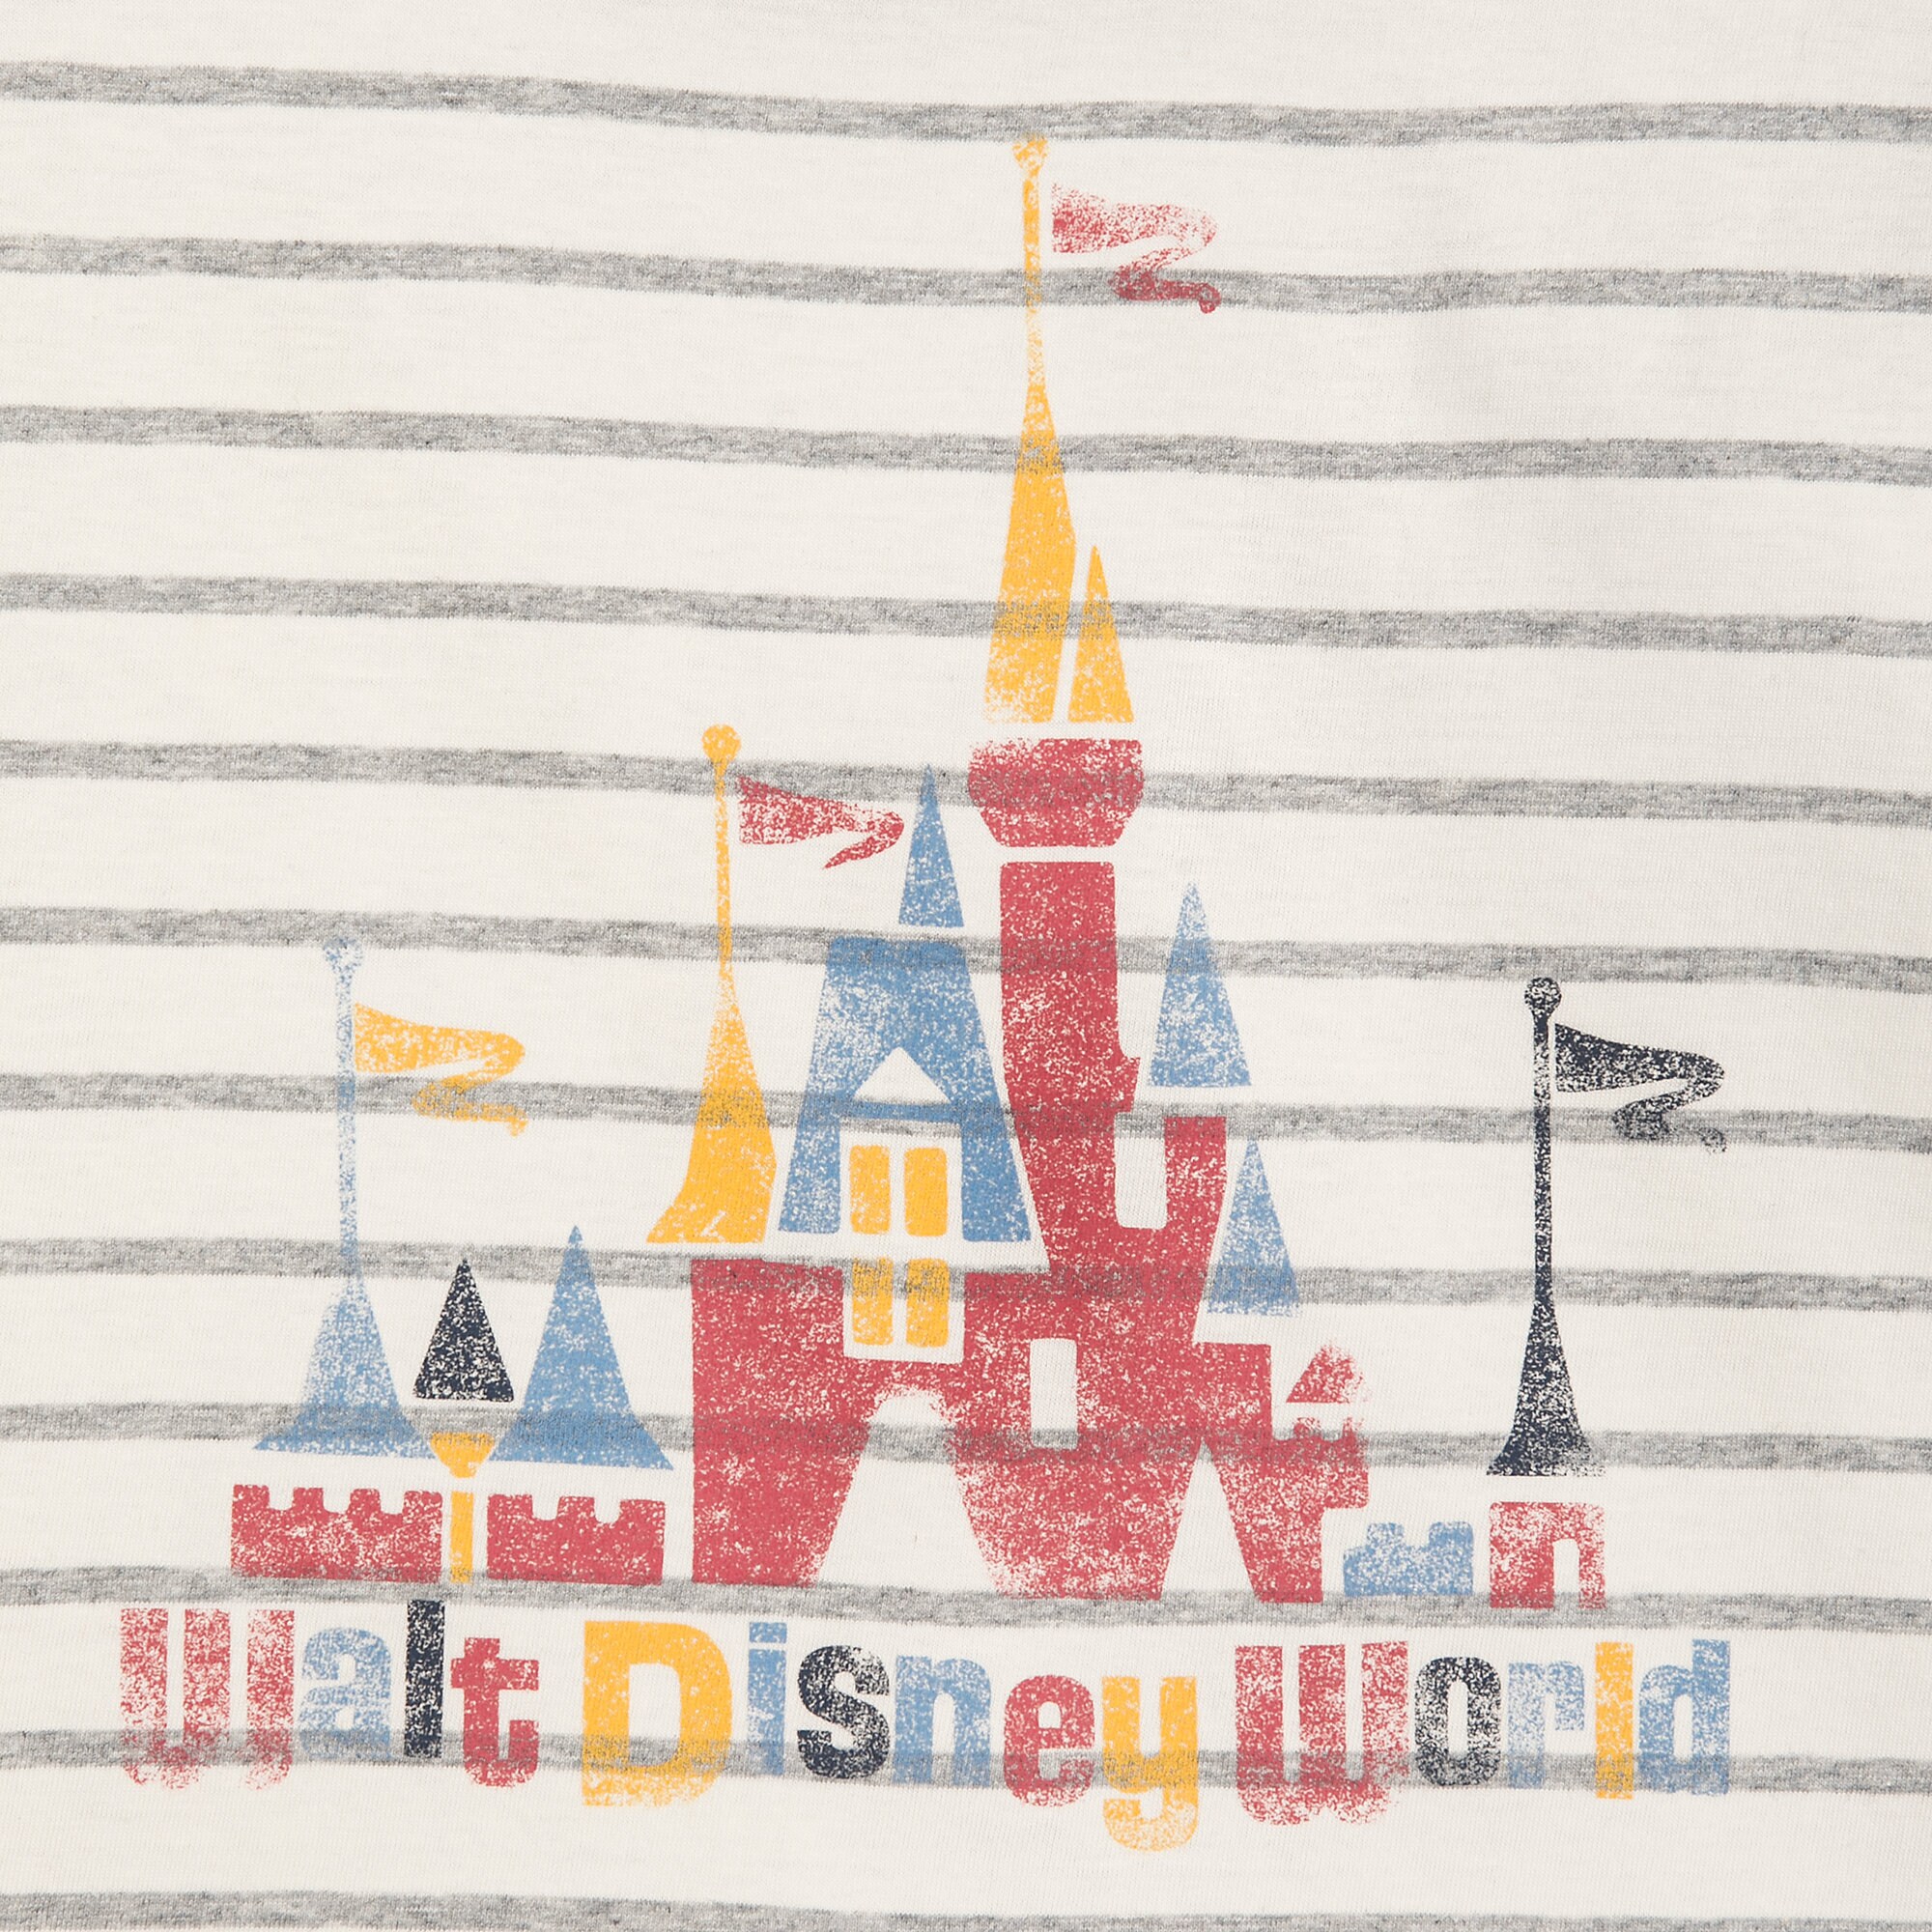 Fantasyland Castle Striped T-shirt for Girls by Junk Food - Walt Disney World